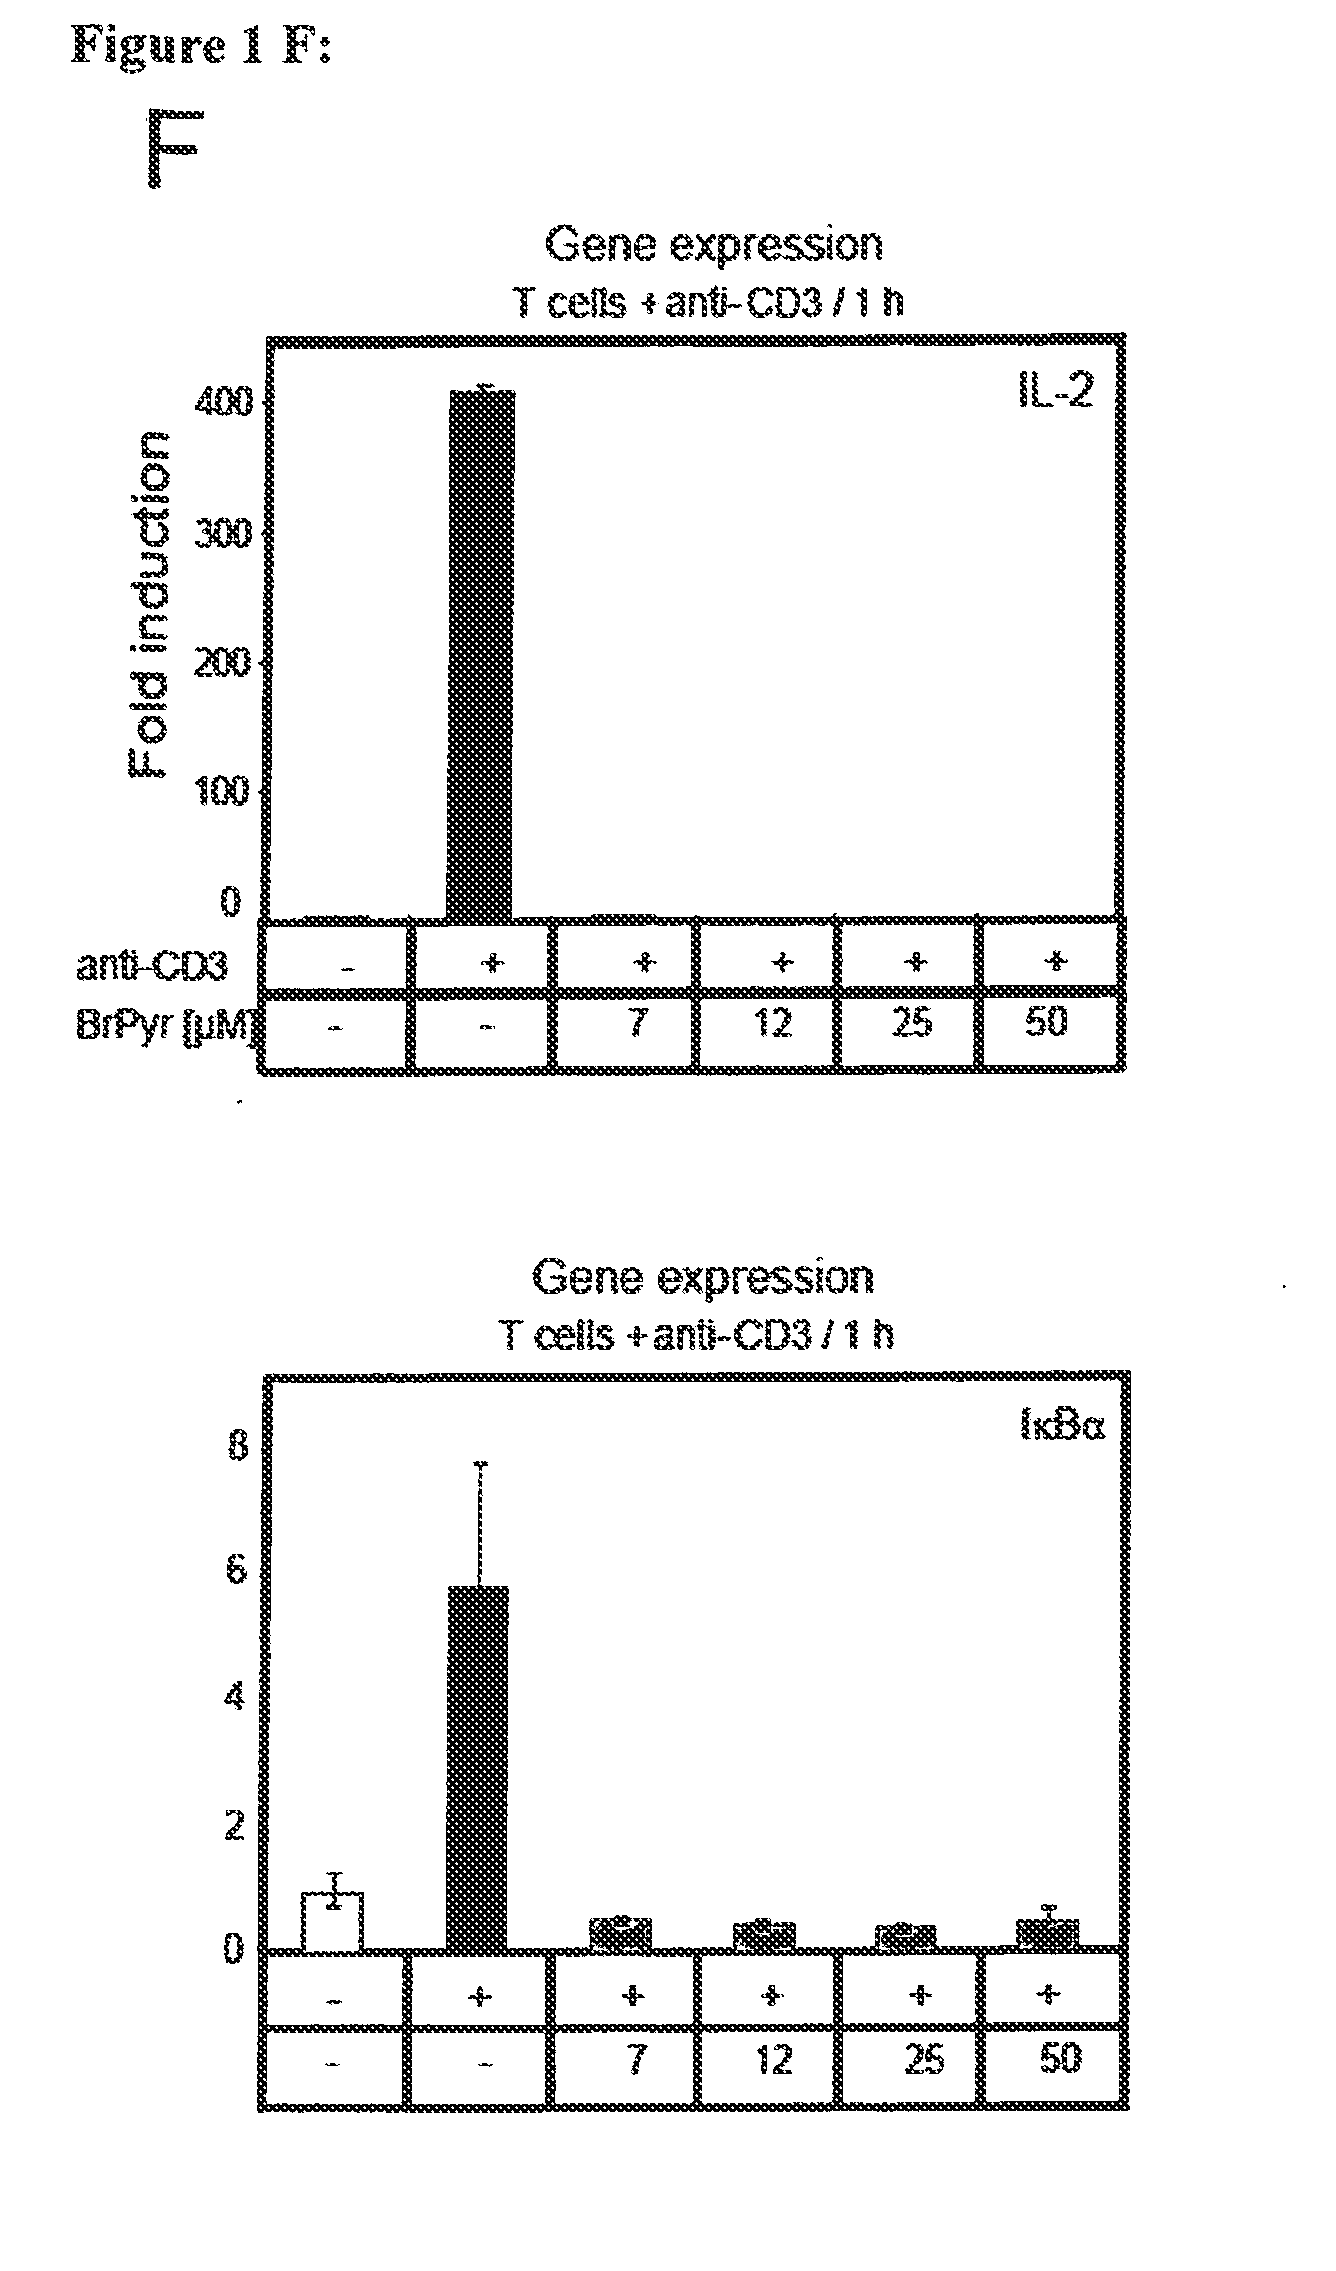 Modulators of adp-dependent glucokinase (ADPGK) and glycerol-3-phosphate dehydrogenase (GPD2) for therapy